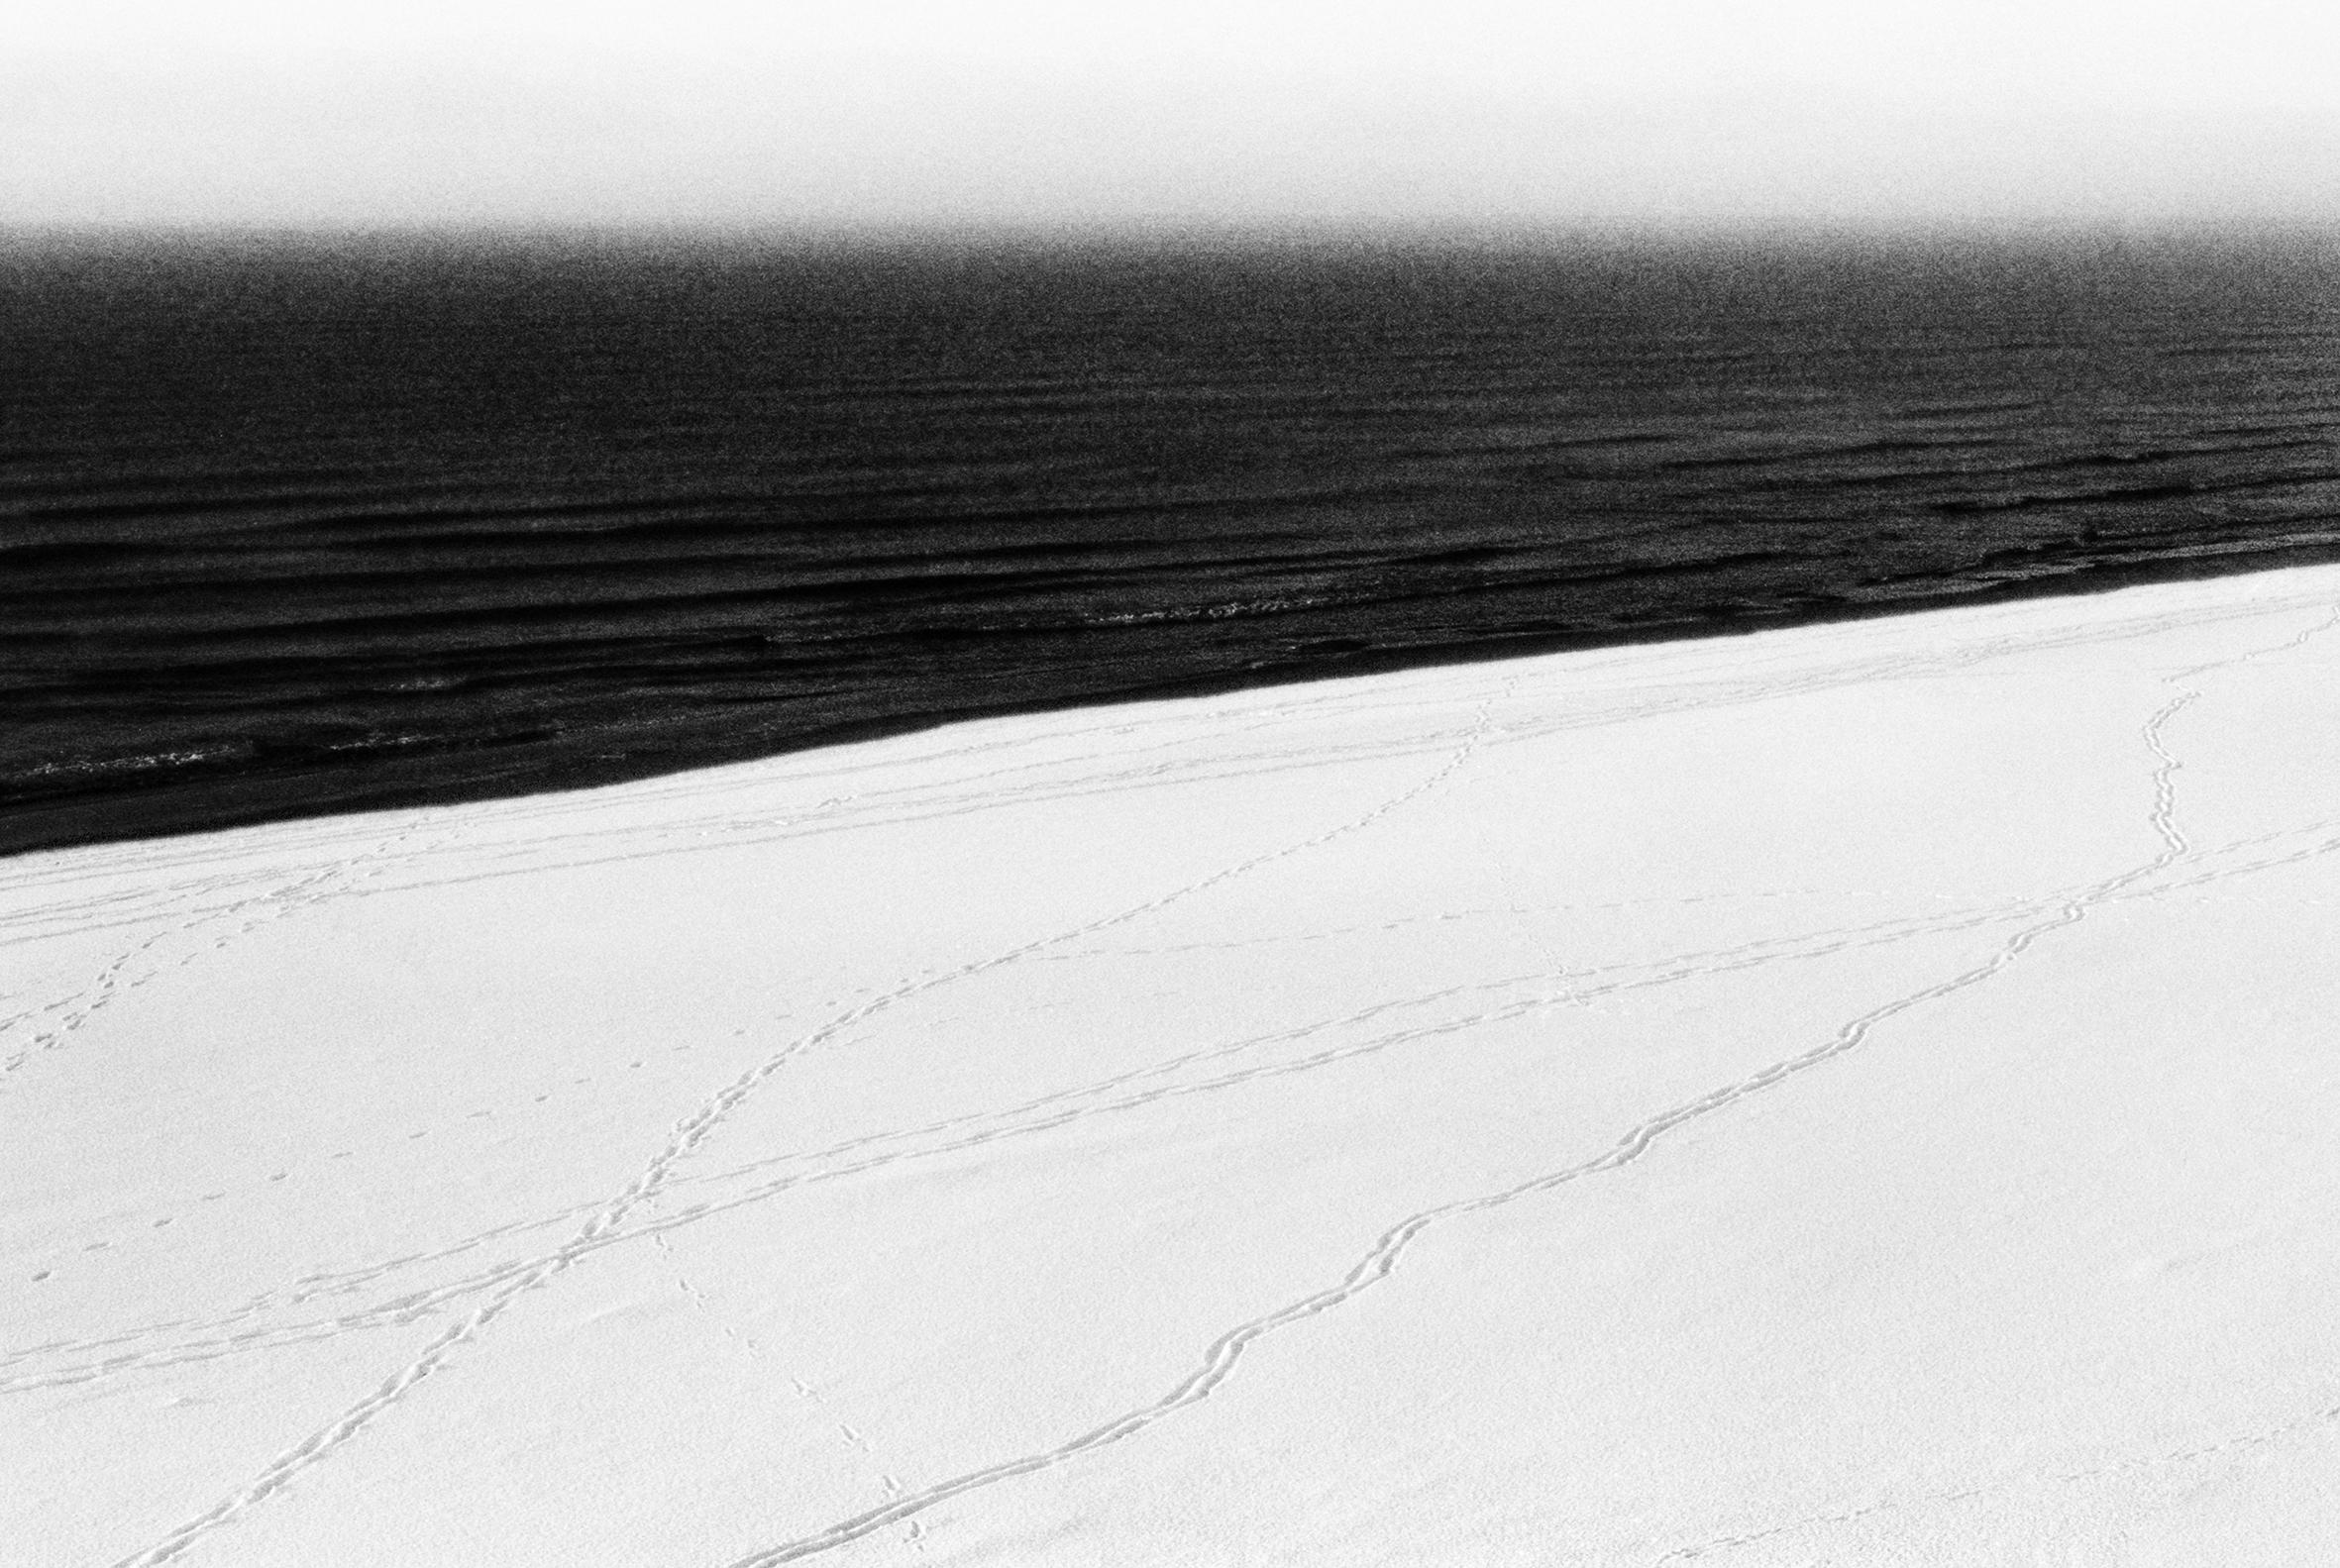 Ugne Pouwell Landscape Photograph - 'Baltic freeze' - black and white analogue landscape photography 70 x 47 cm